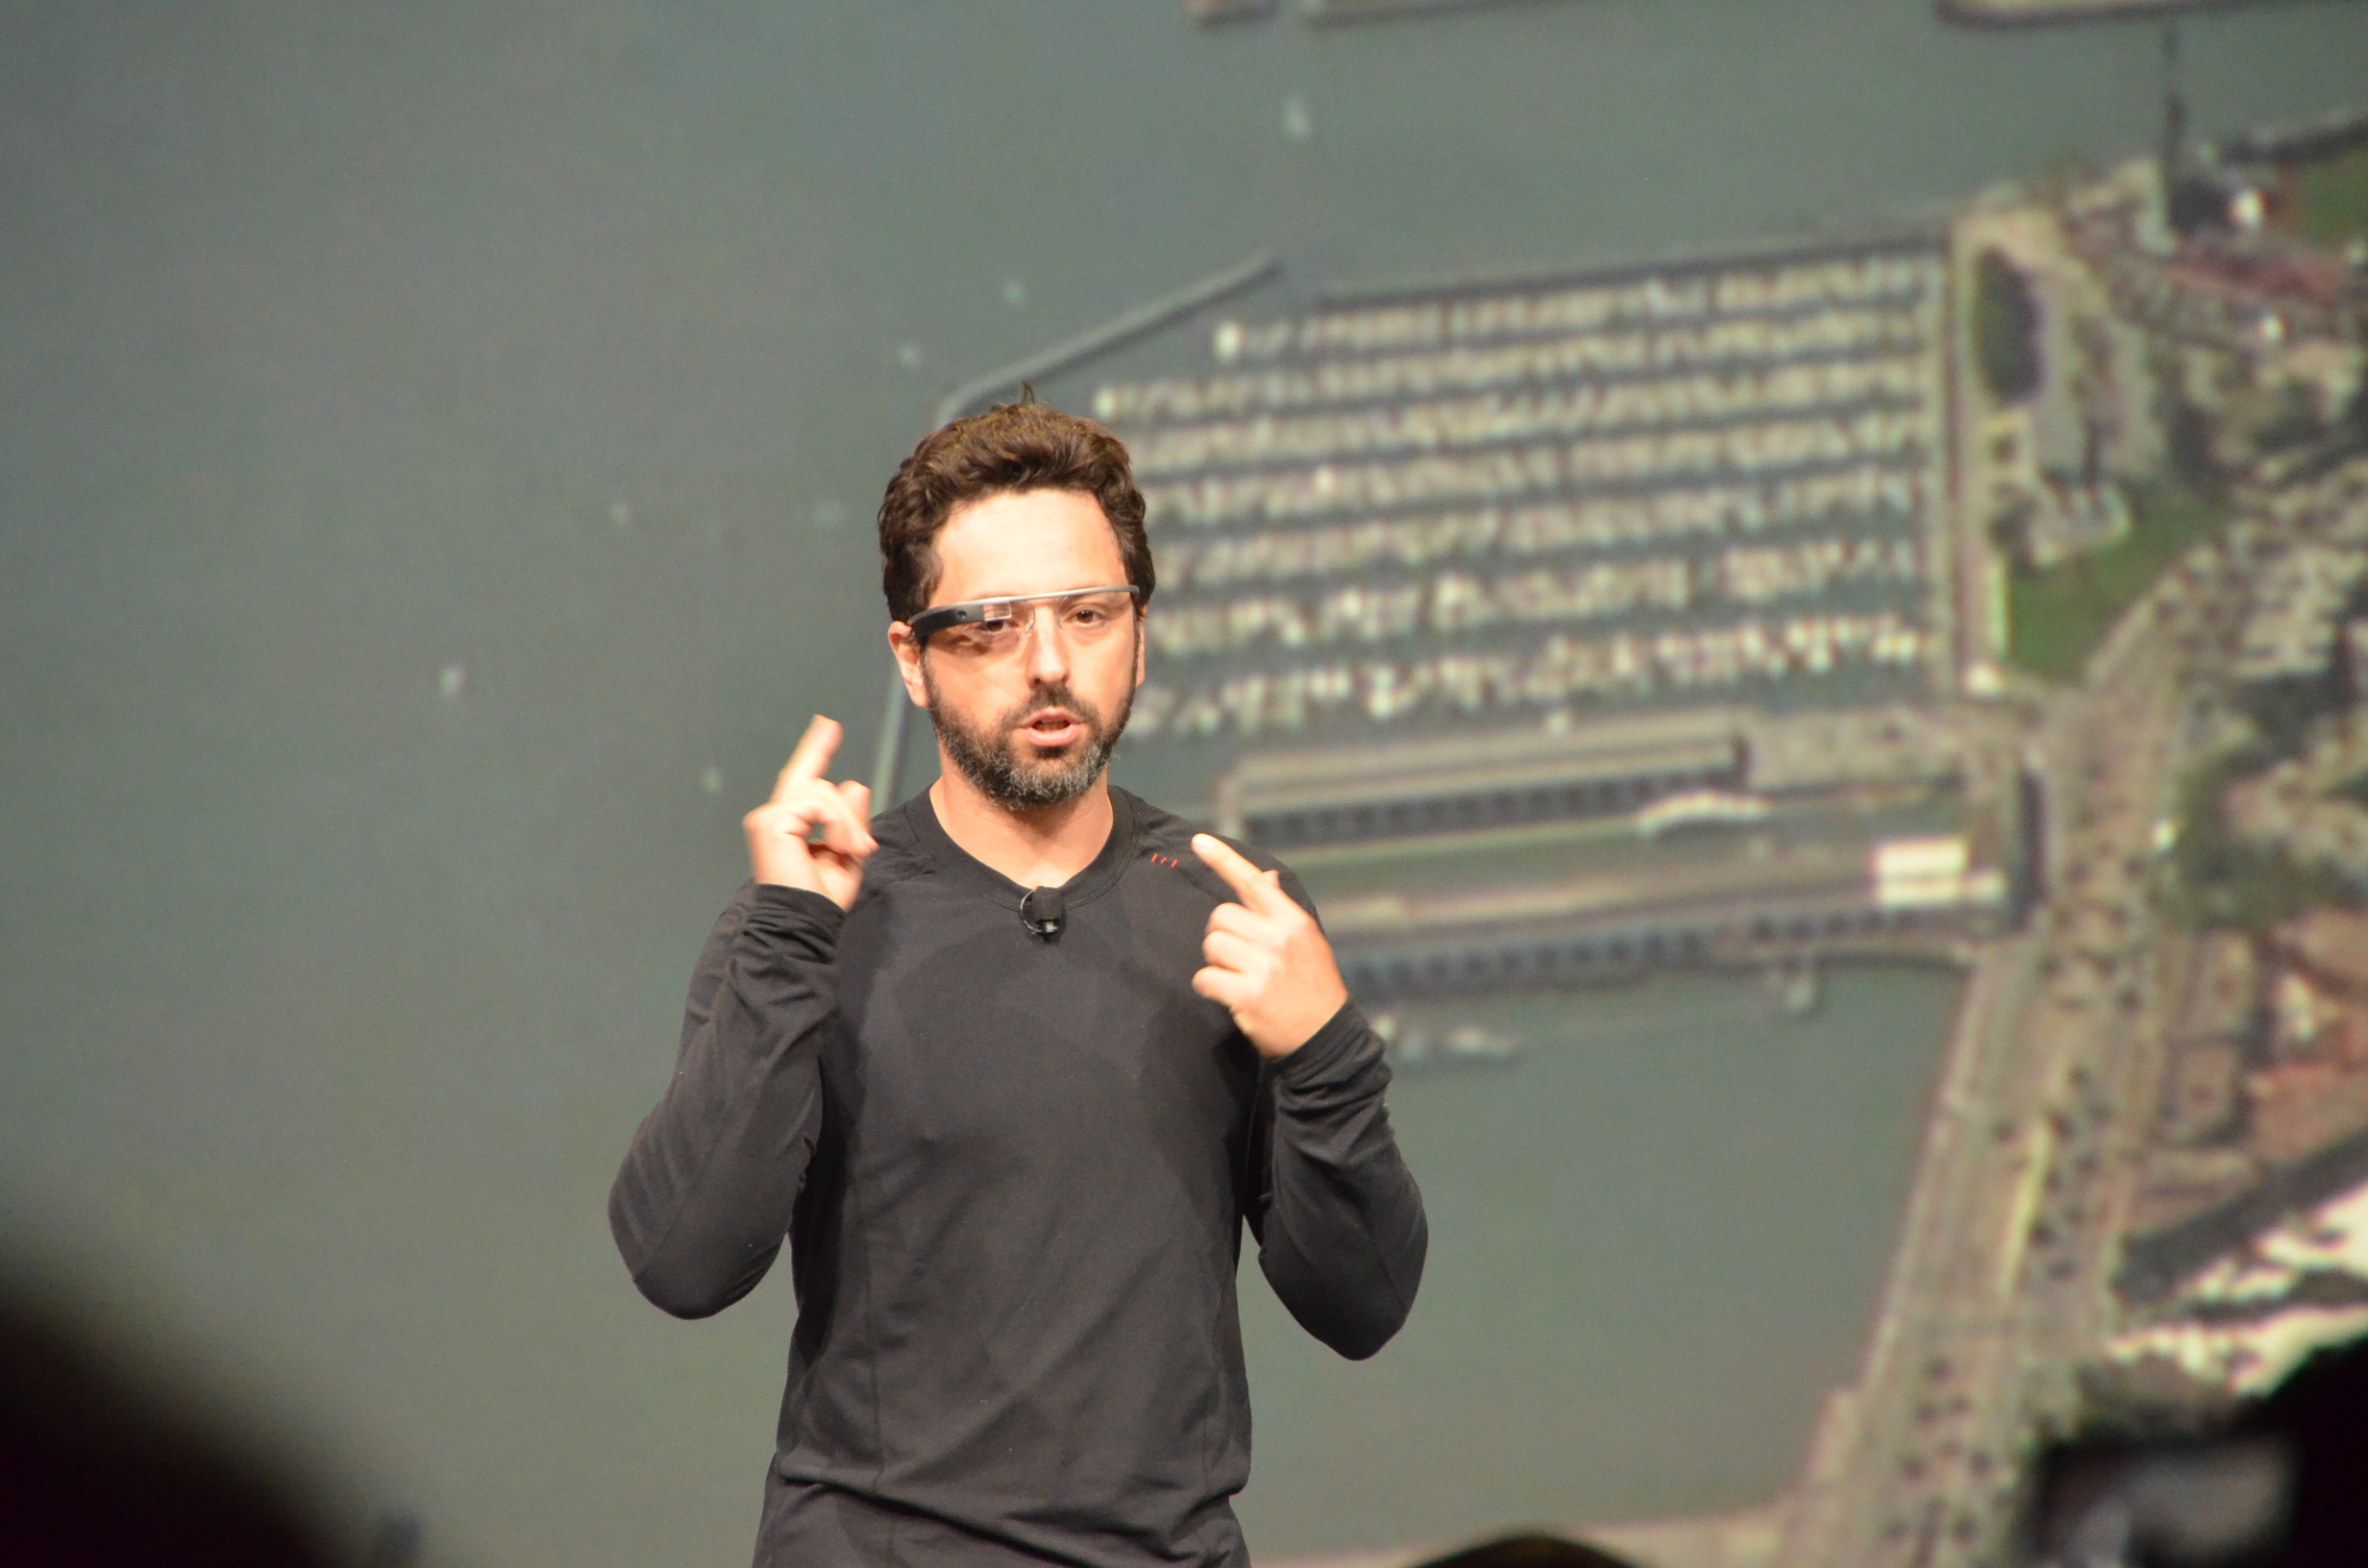 Sergey Brin demonstrating Google Glass on stage at Google I/O 2012.